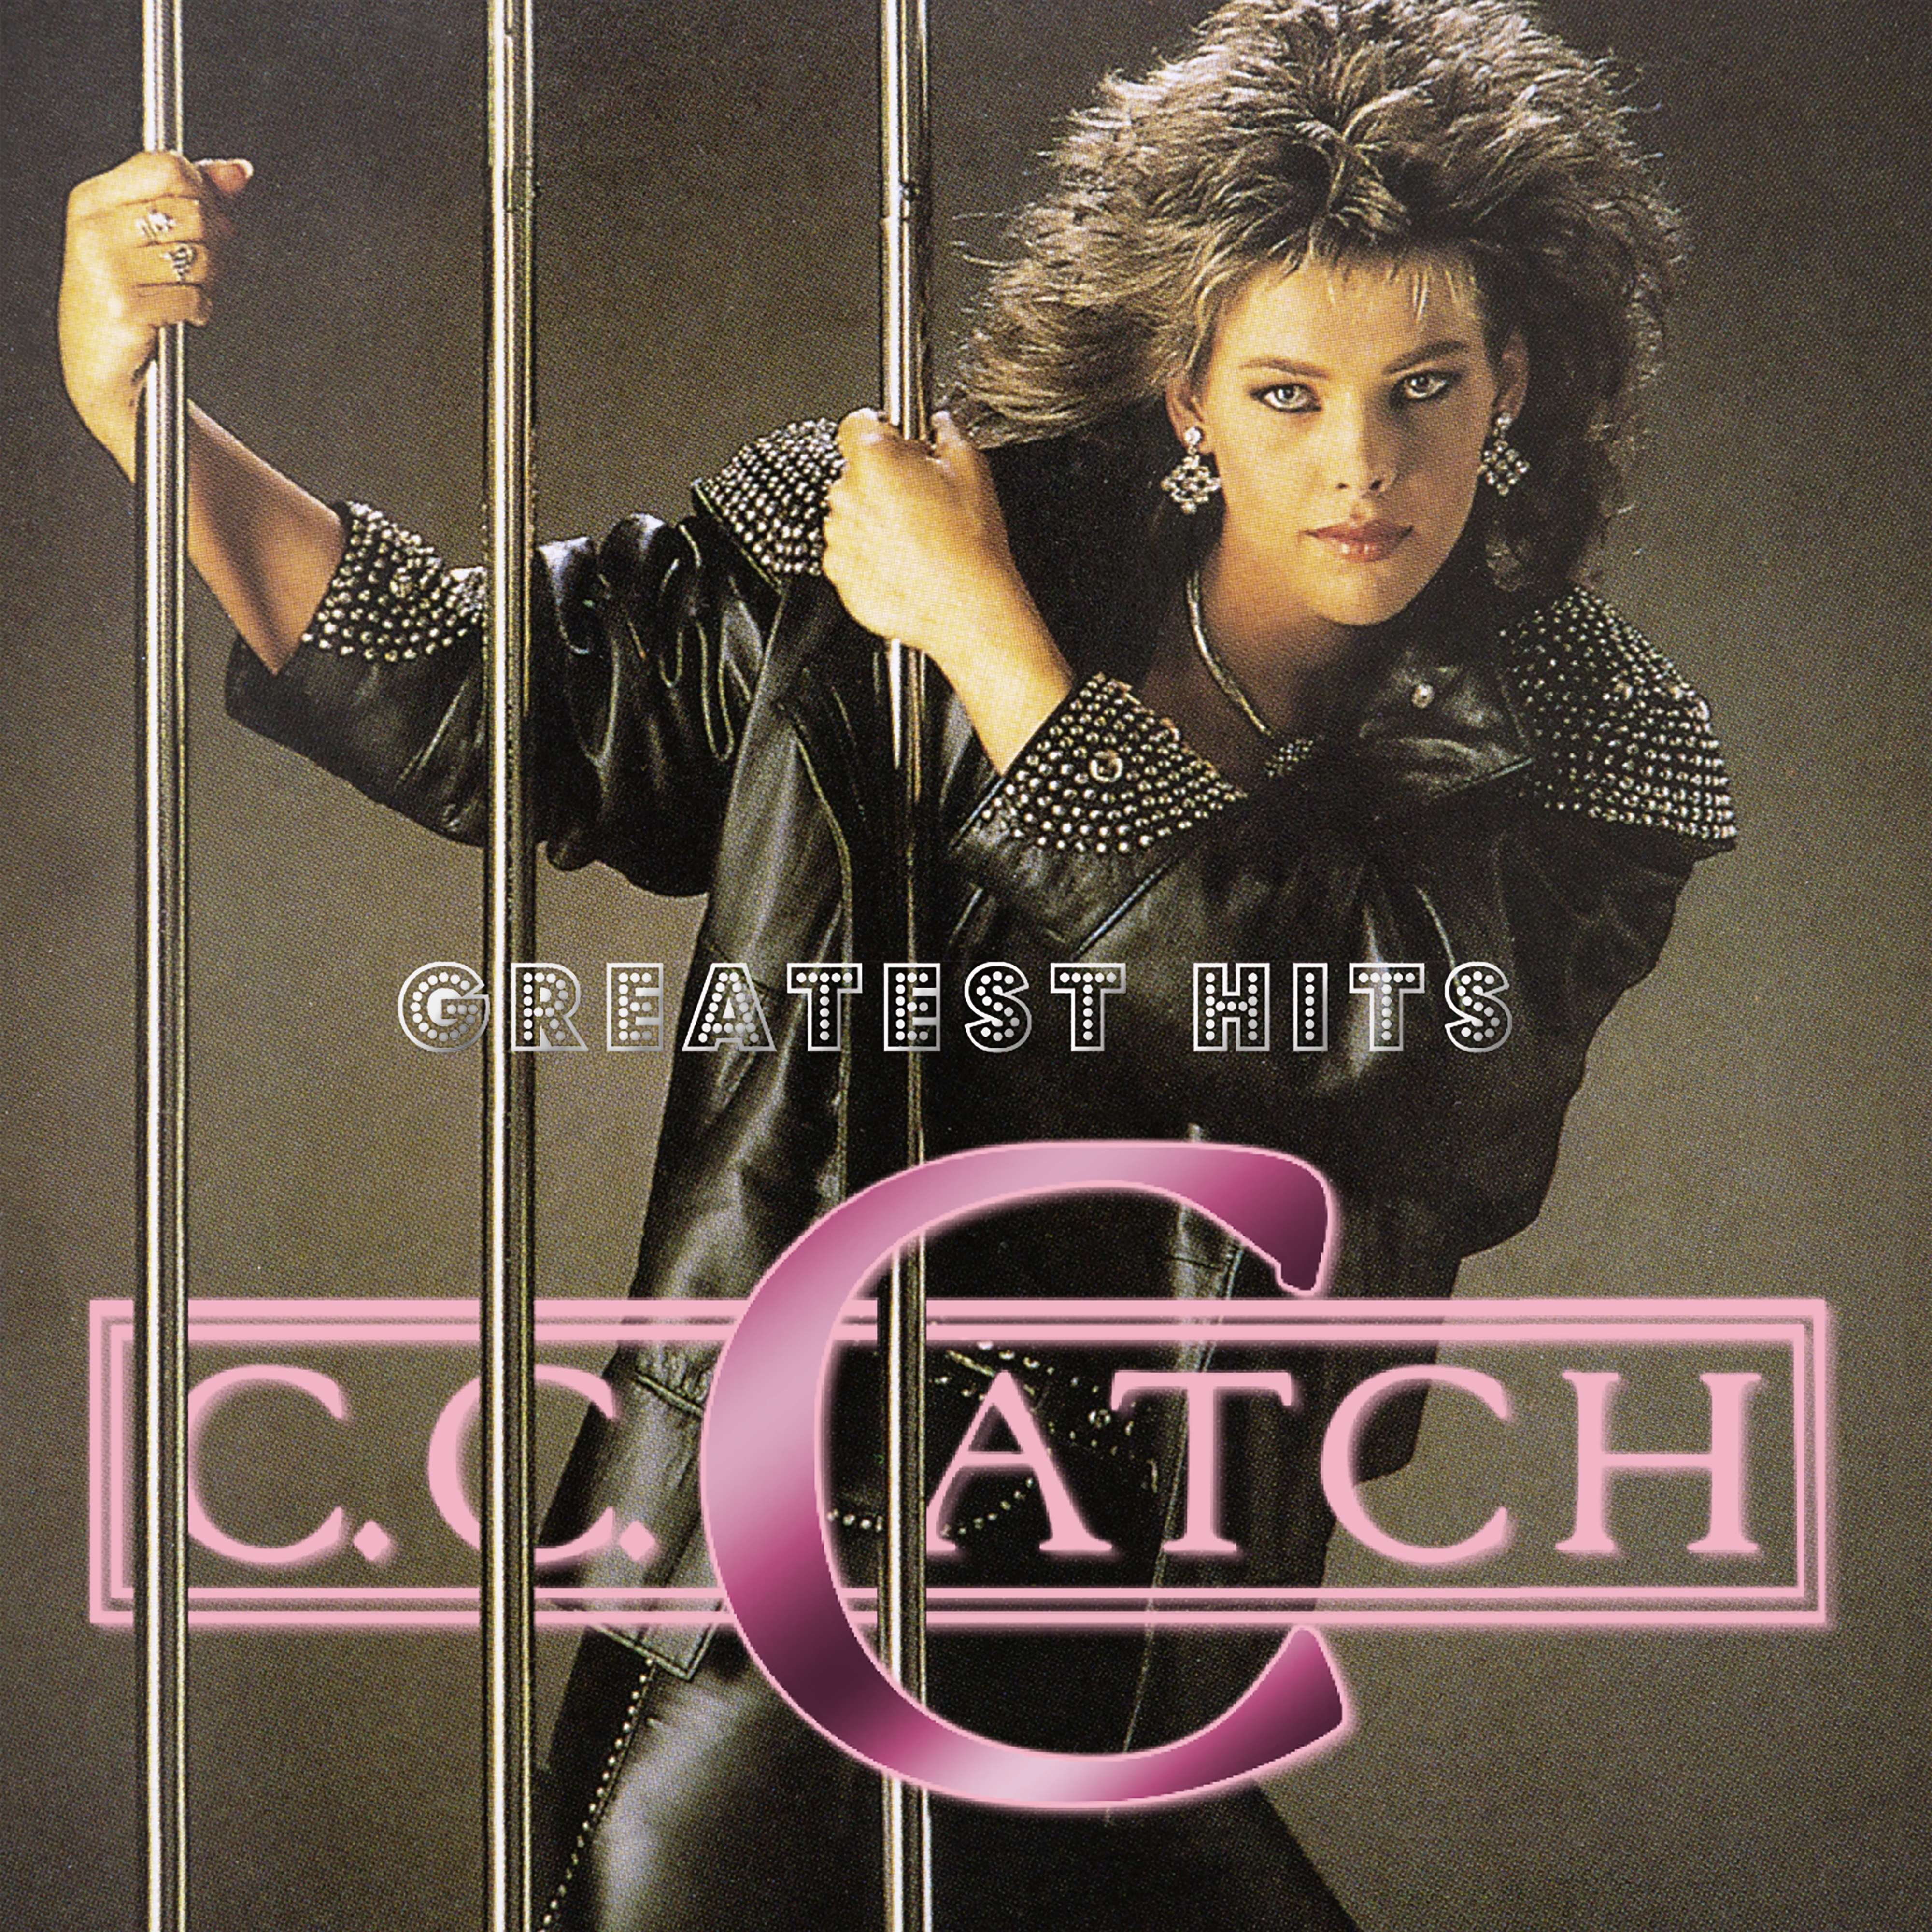 C catch my lose. C C catch обложки альбомов. C C catch 1990. Cc catch CD. Cc catch оболочки альбомов.